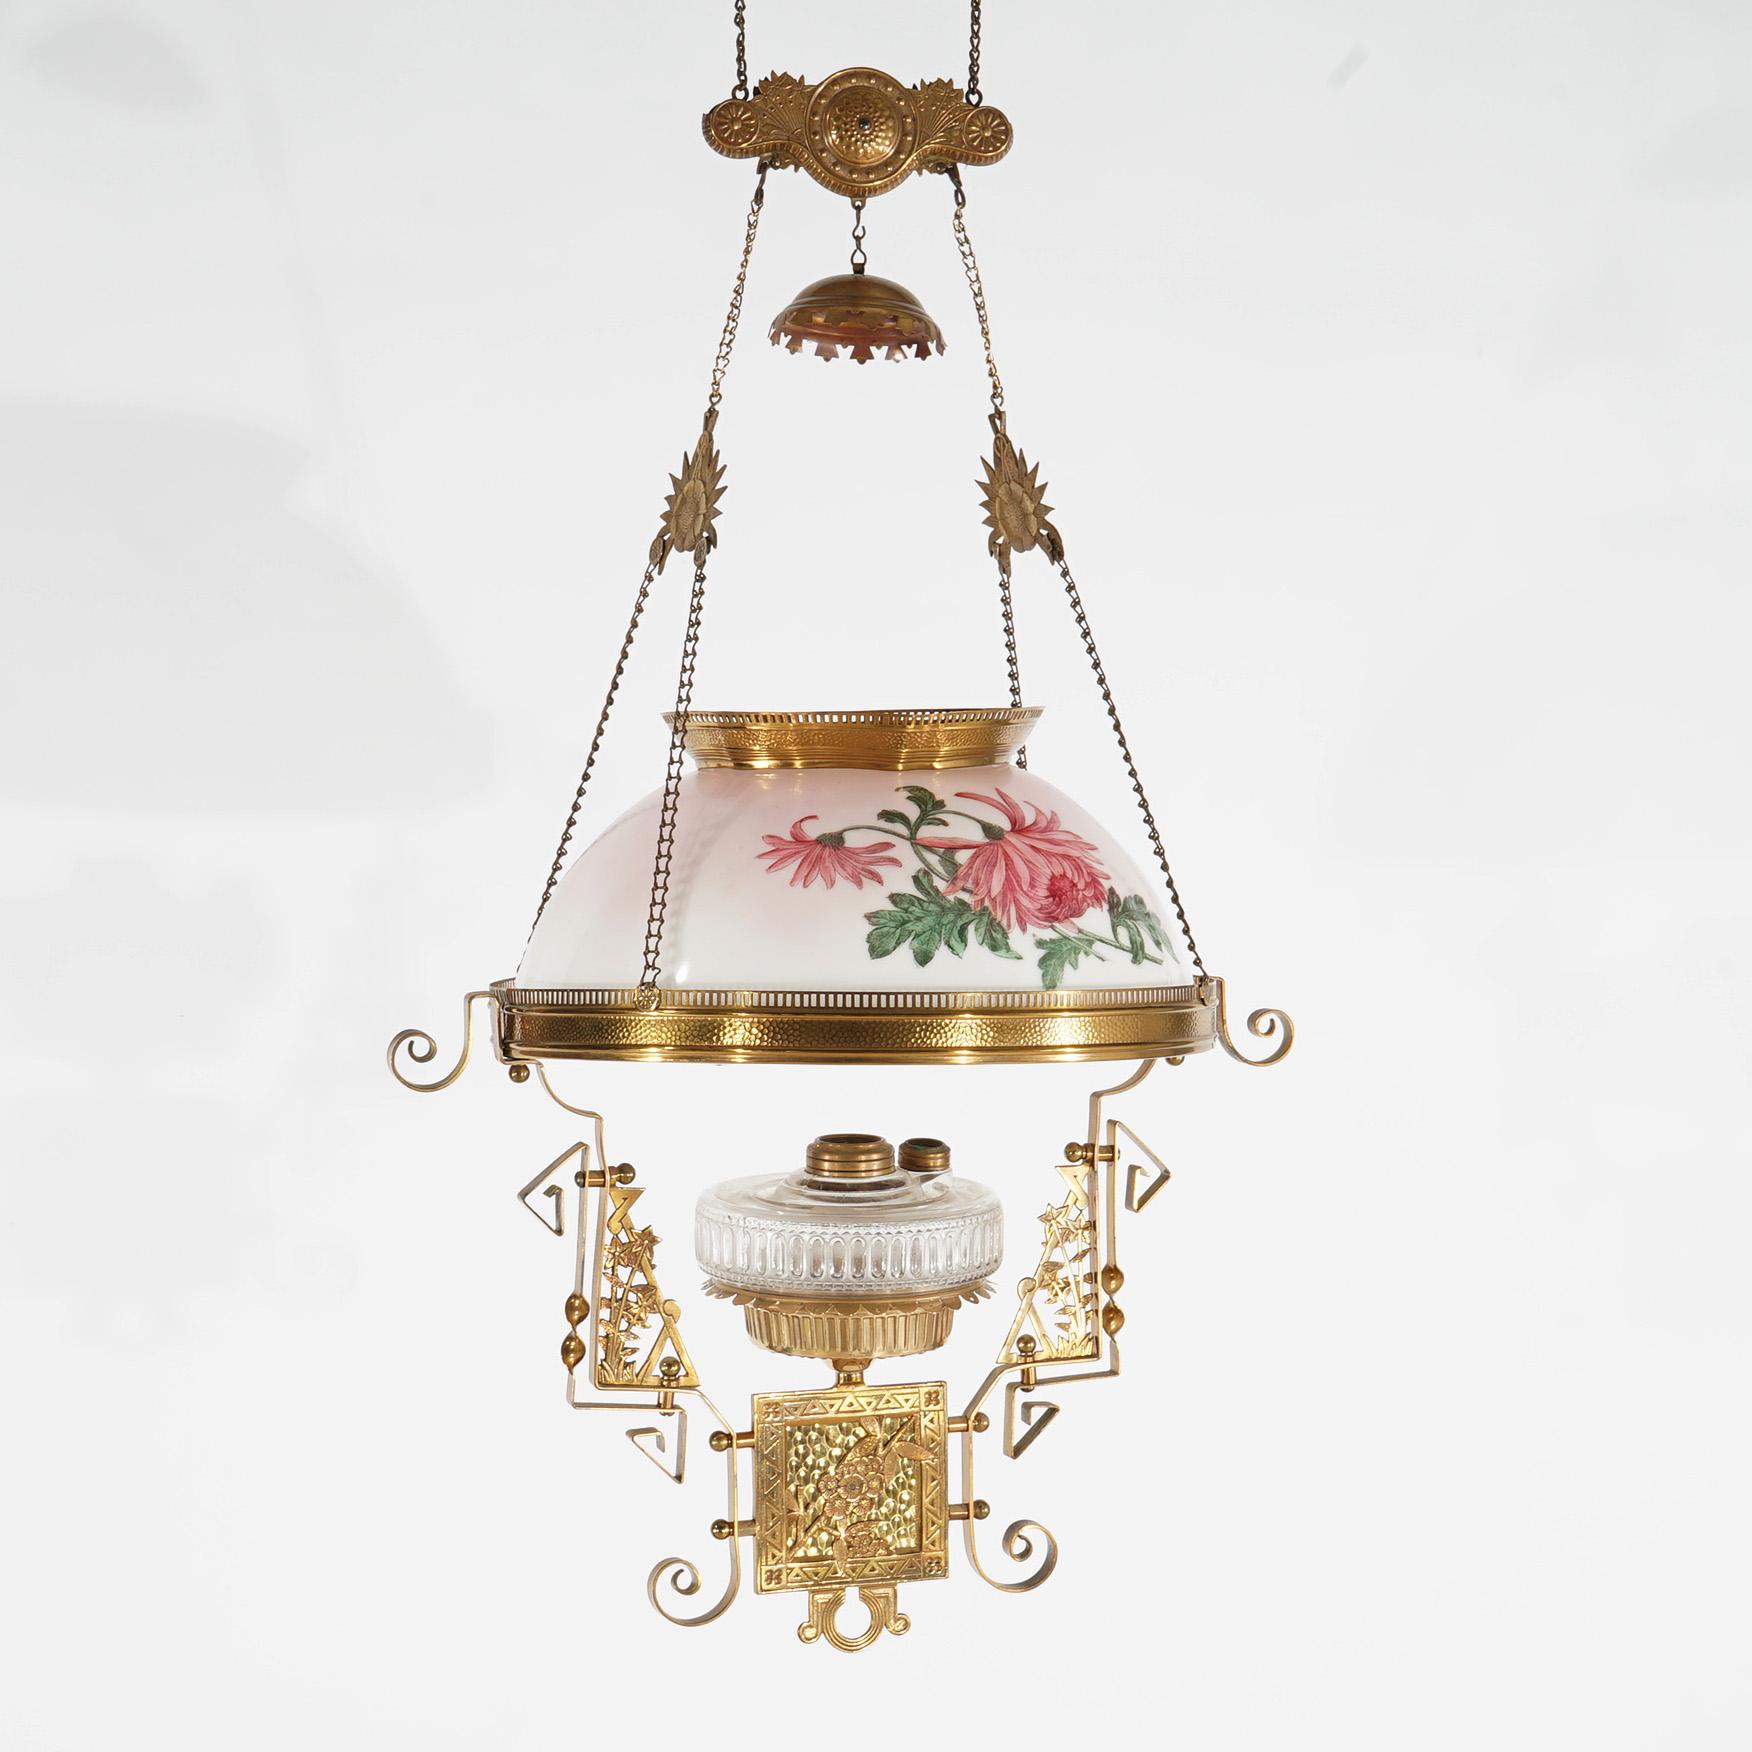 Antique Aesthetic Movement Hand Painted Hanging Kerosene Lamp C1890 For Sale 4